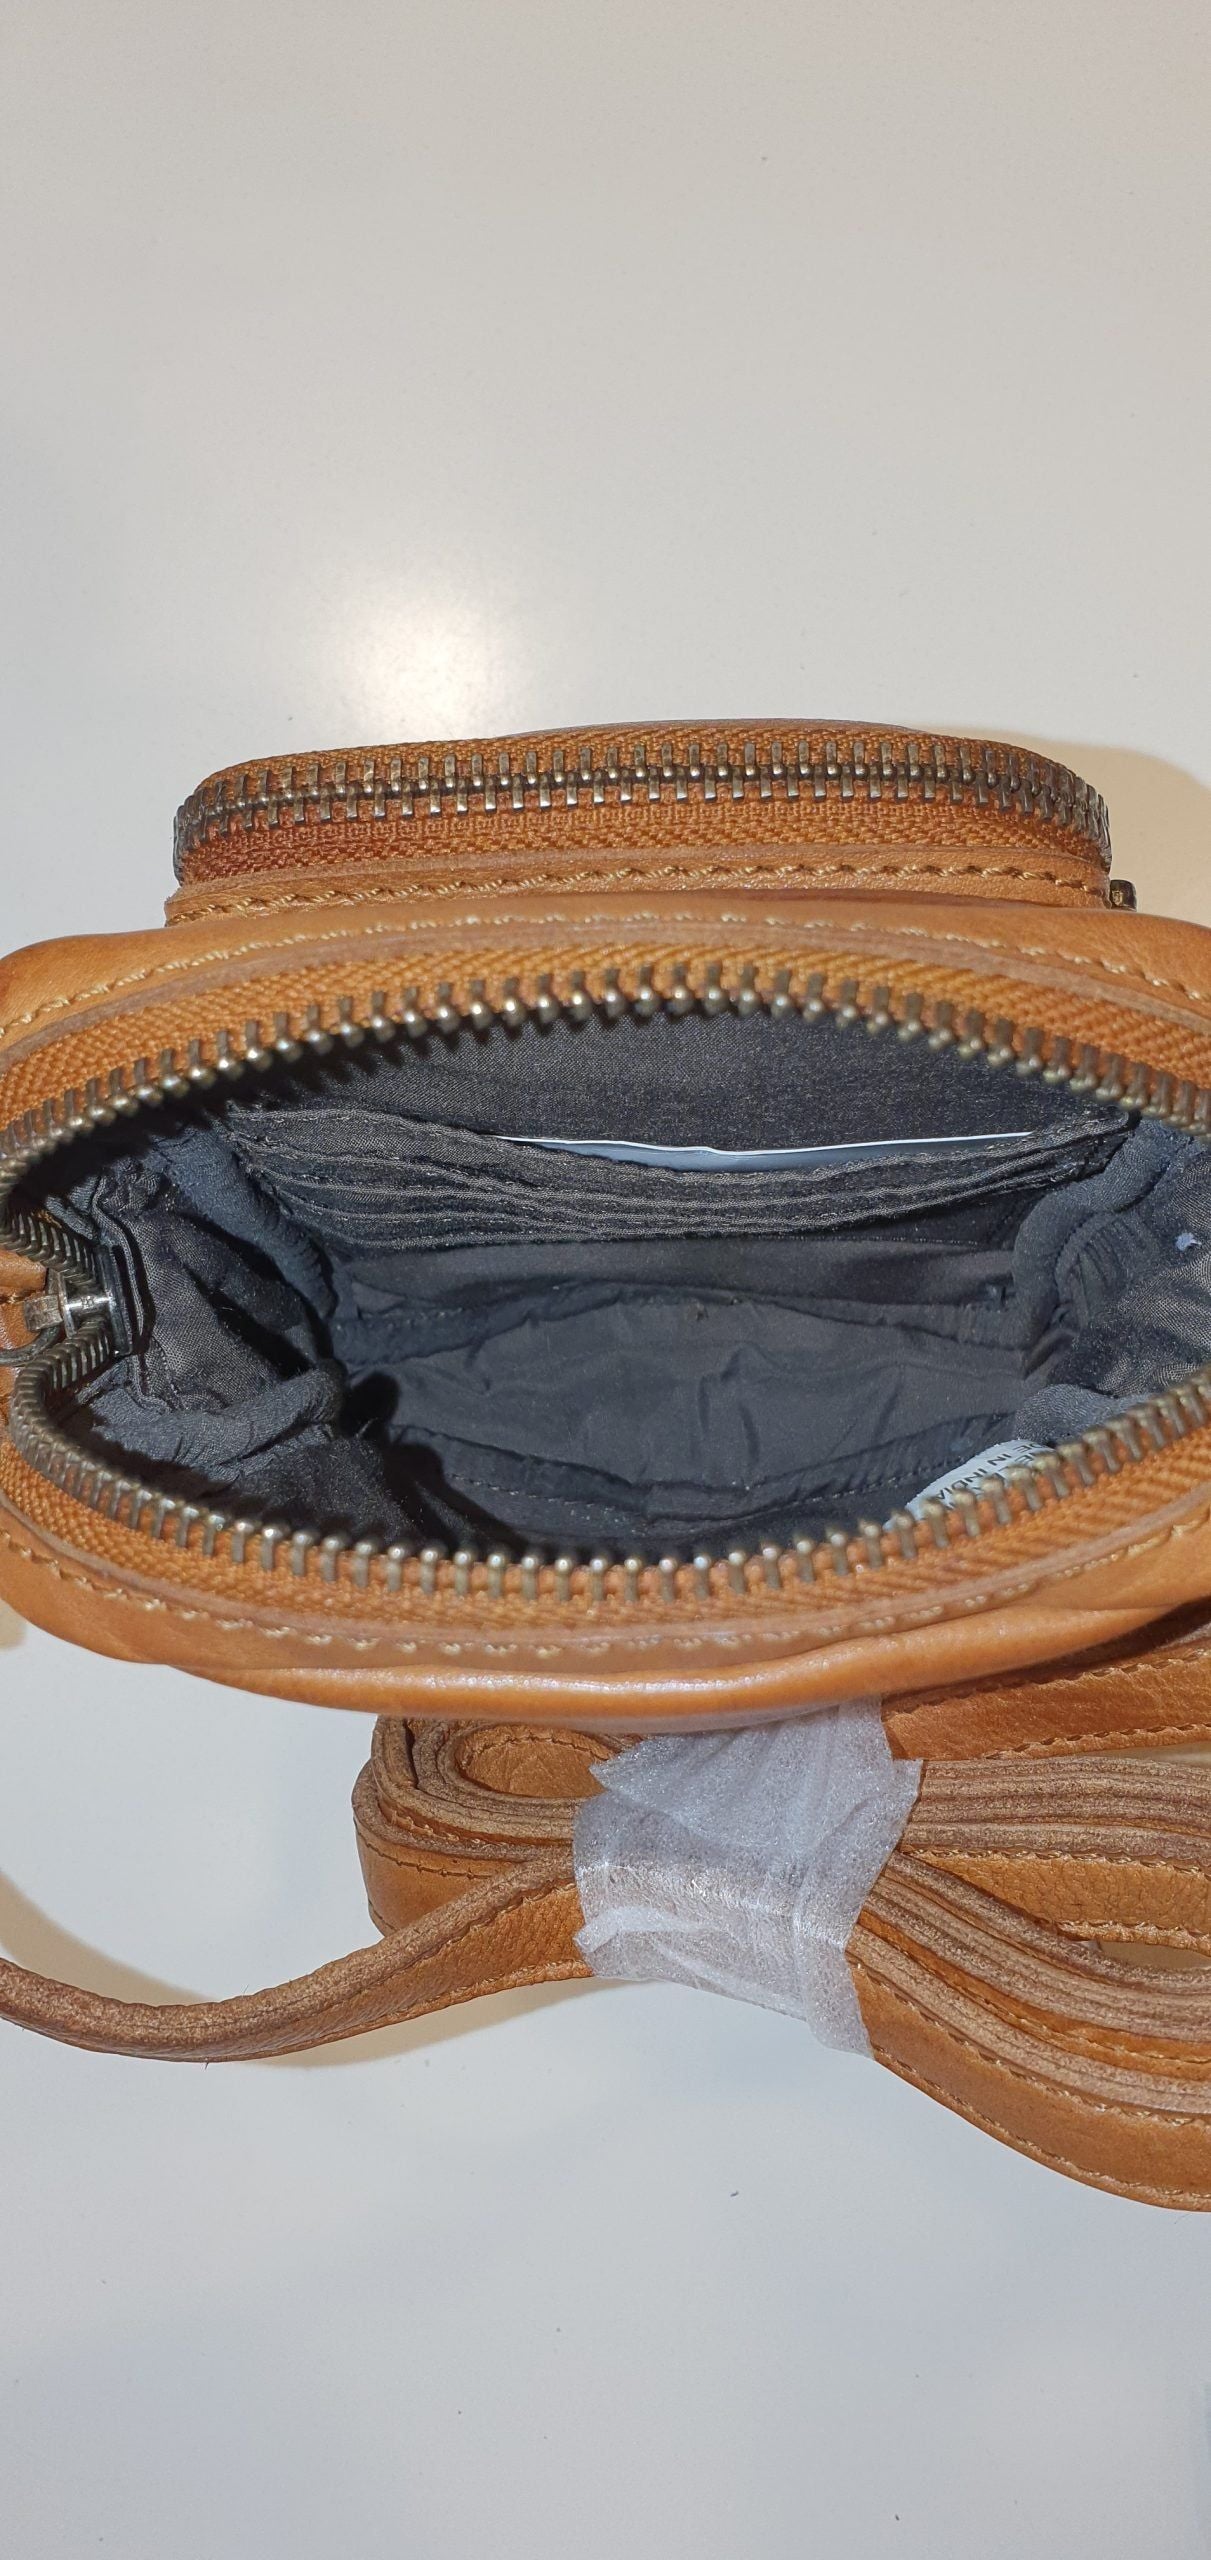 Rugged Hide - Hailey compact leather crossbody - rainbowbags